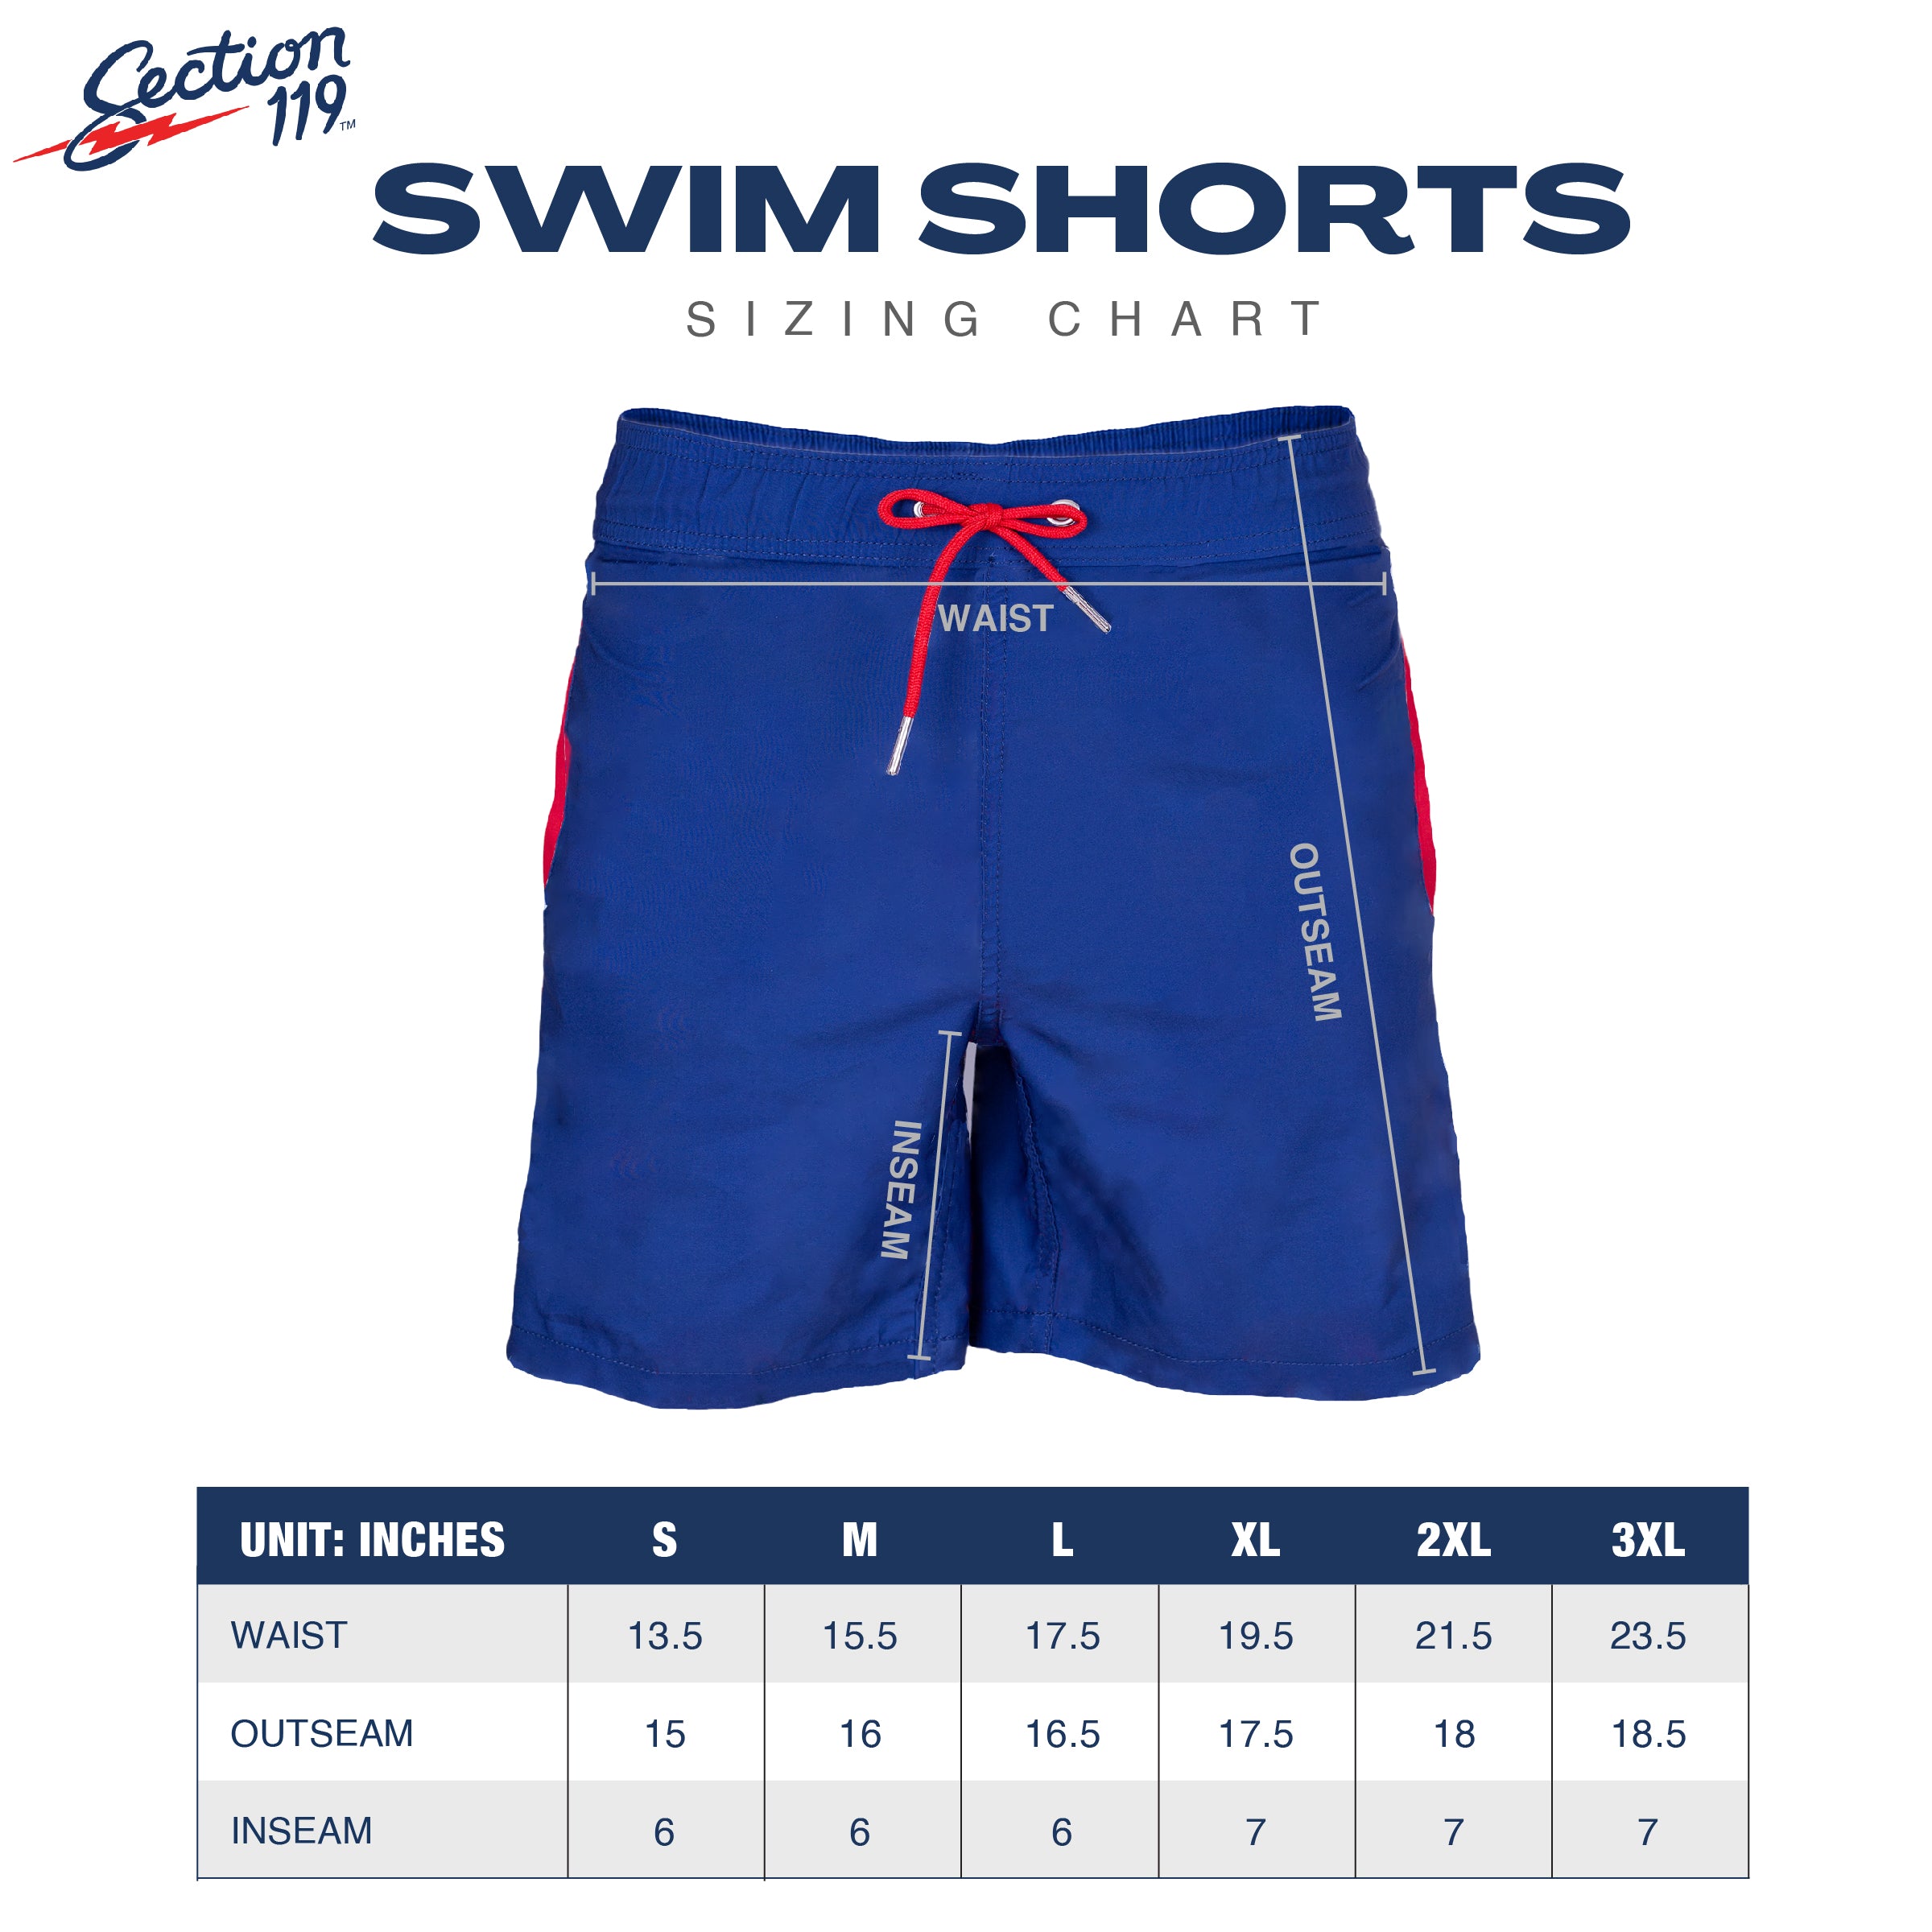 Neon Dancing Bear Swim Shorts - Section 119